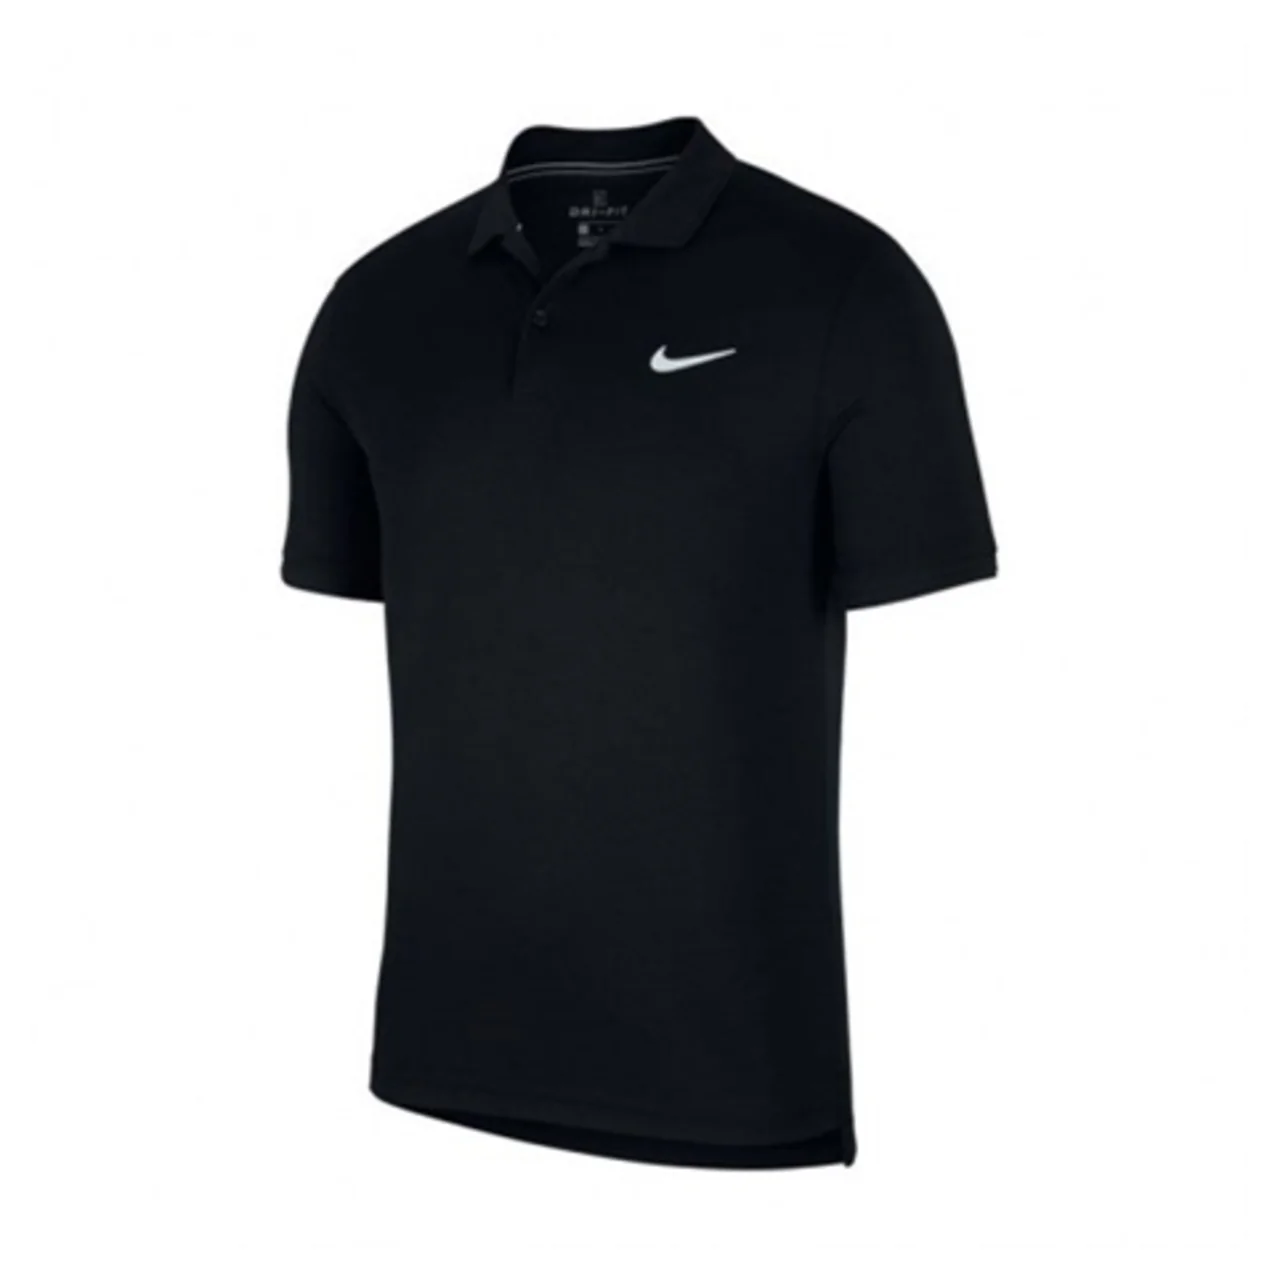 Nike Dry Polo Team Black